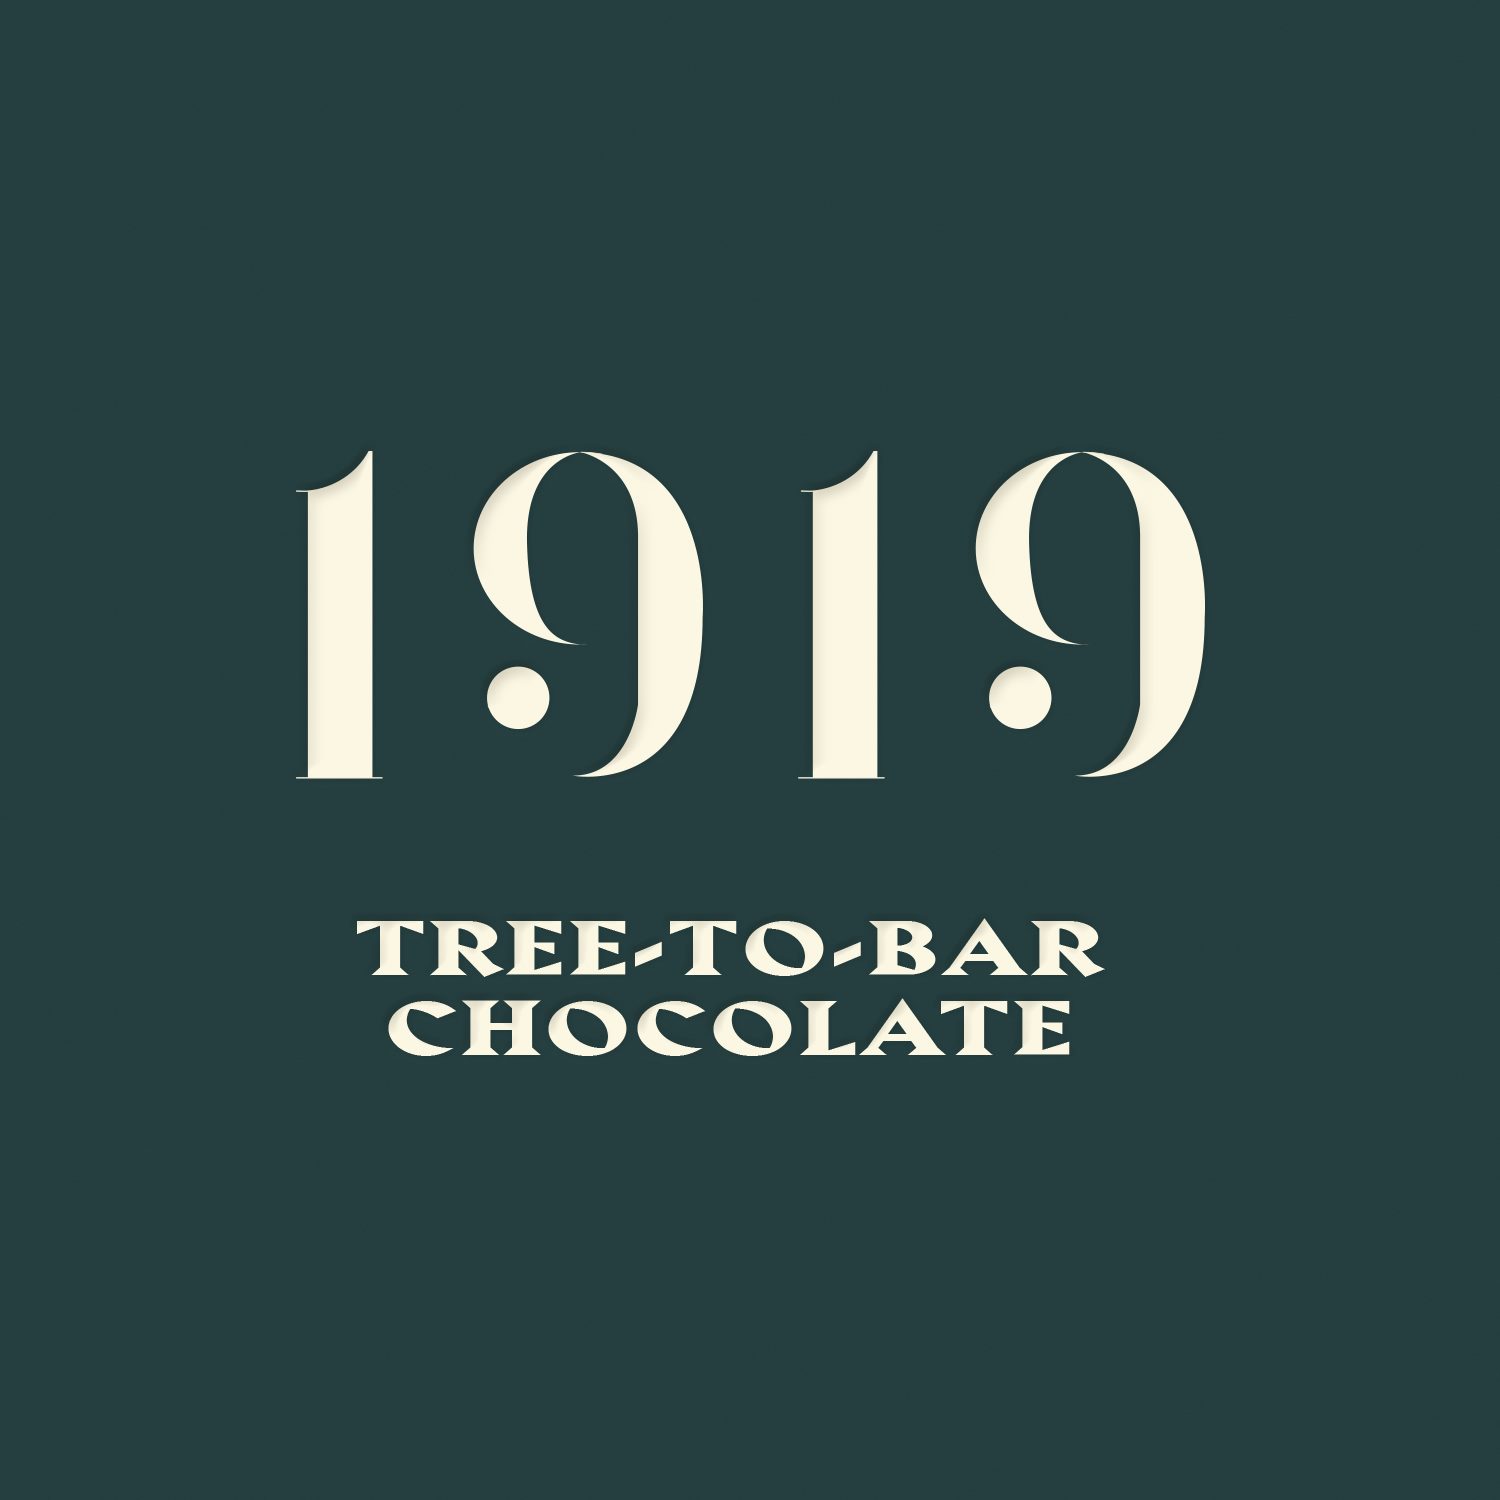 1919 Tree-To-Bar Chocolate